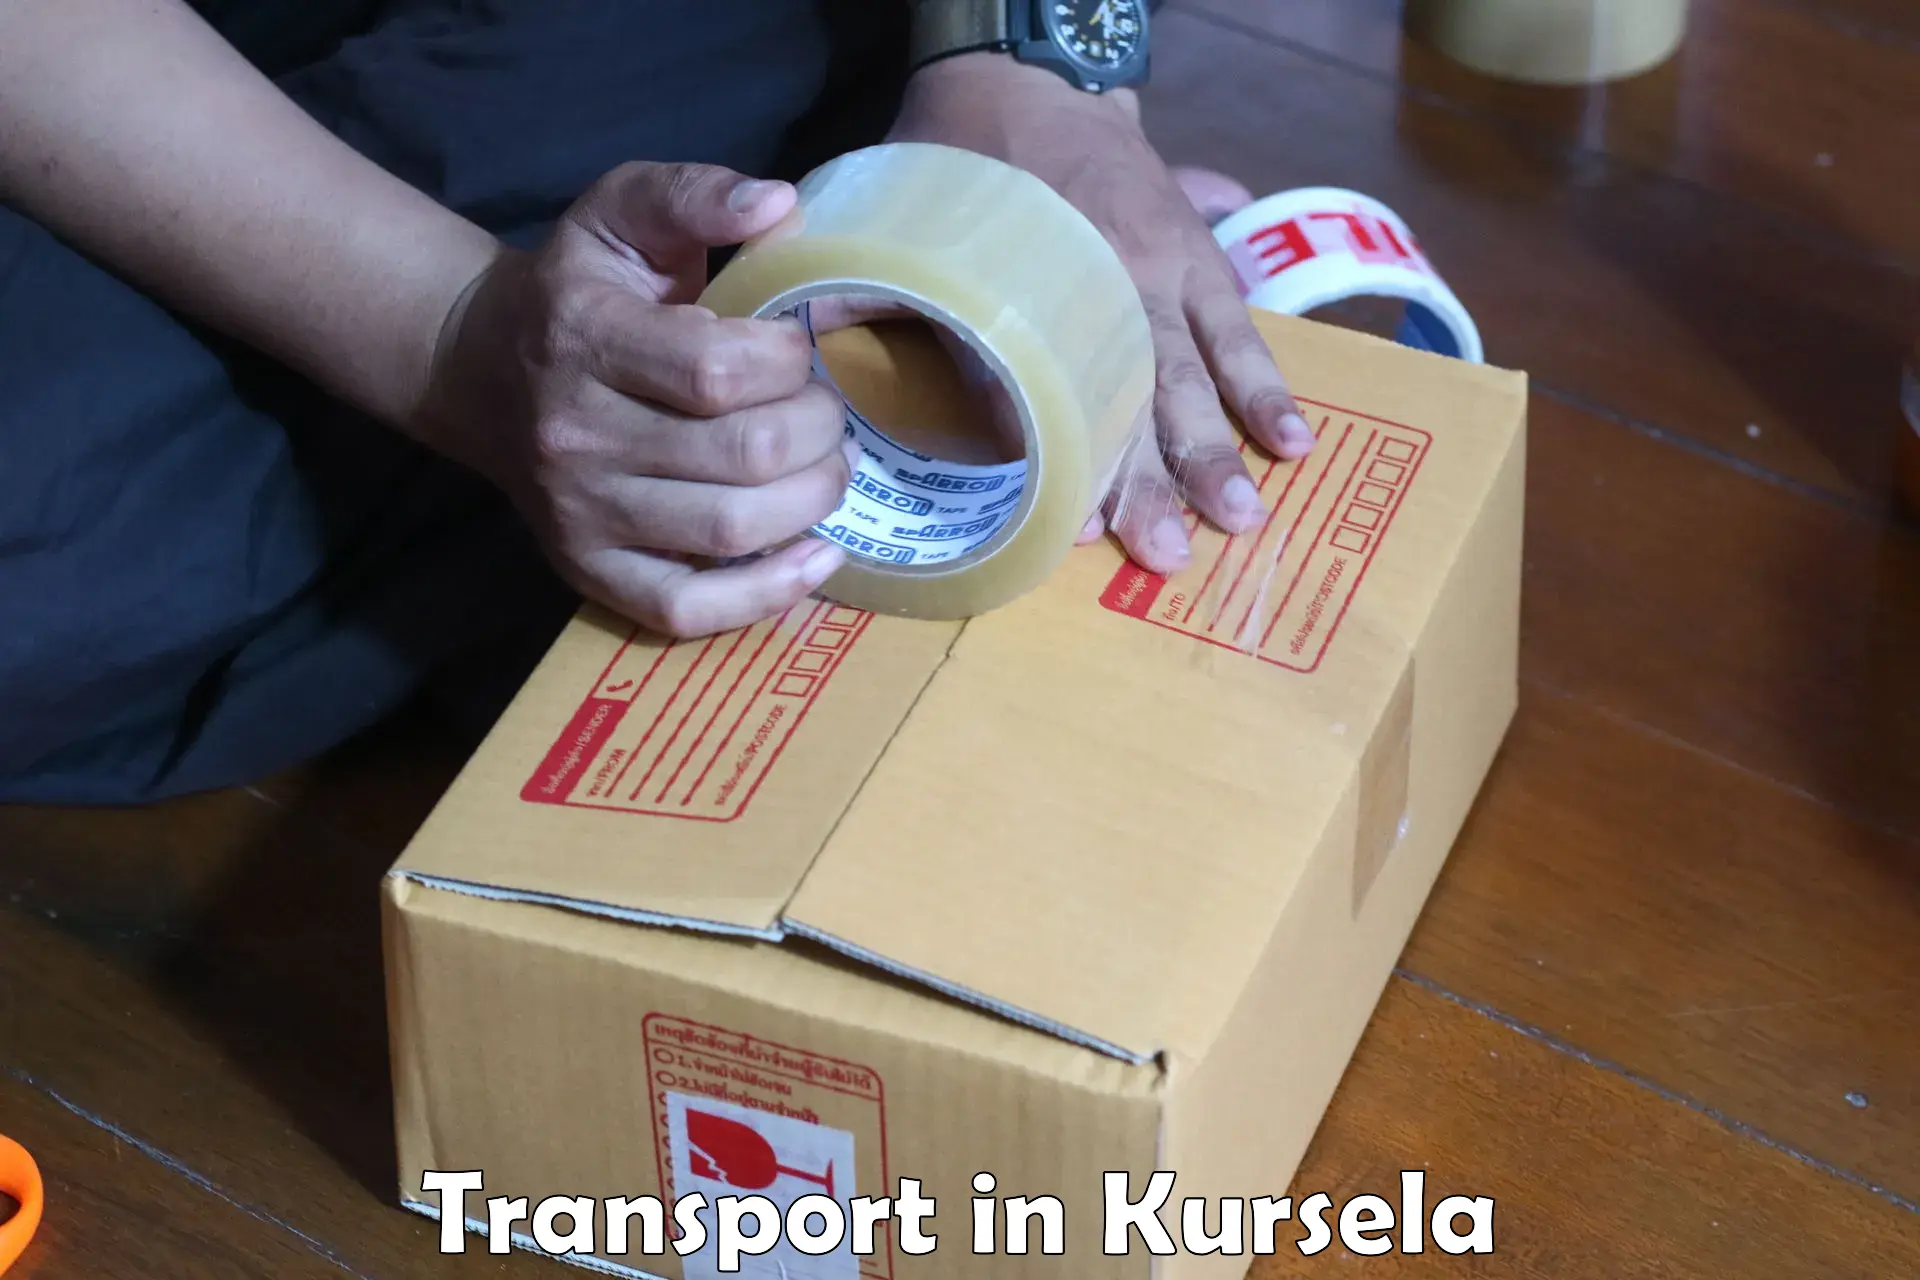 Daily parcel service transport in Kursela